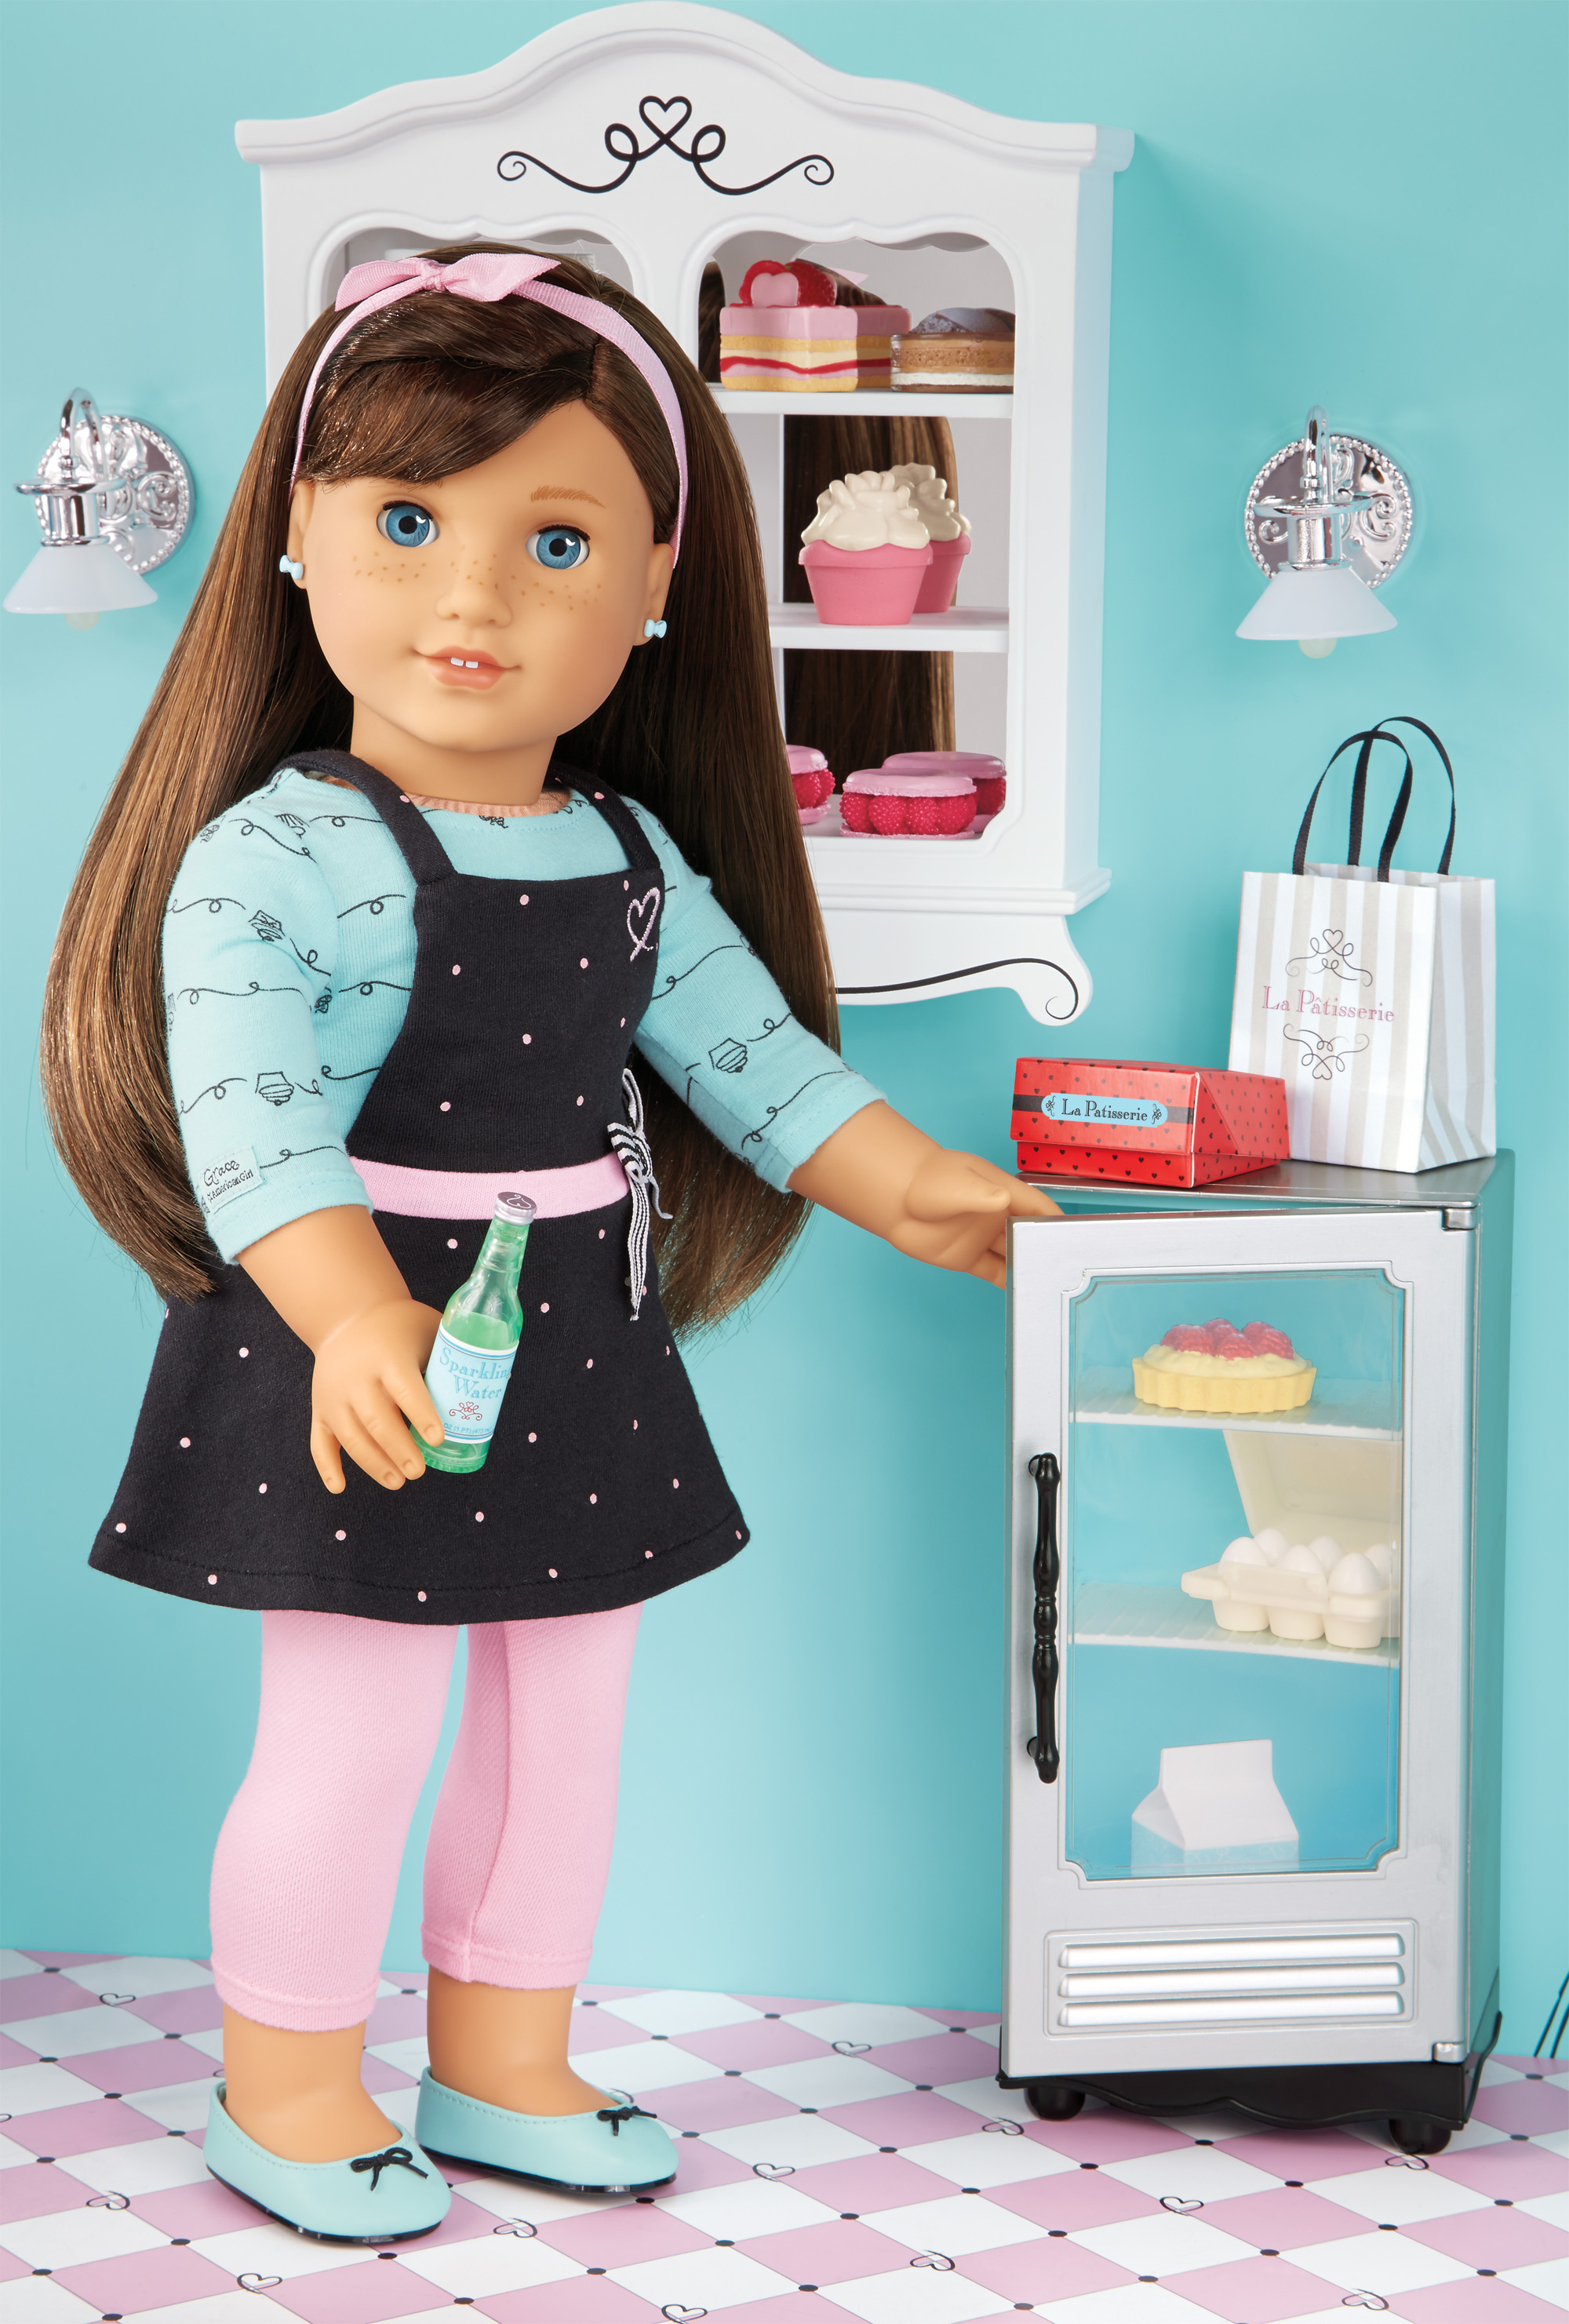 american girl doll bakery set